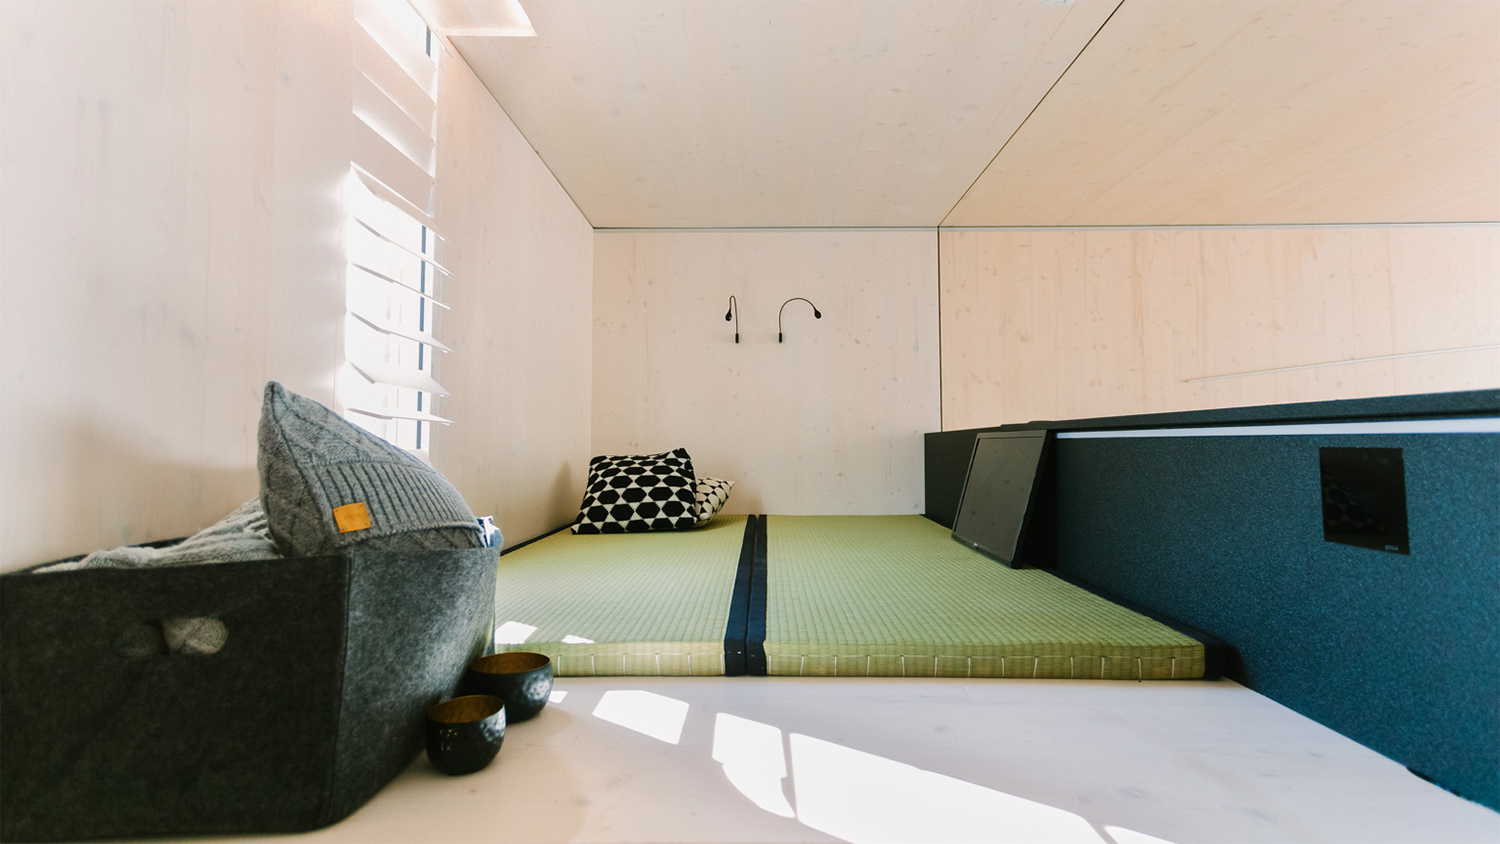 Koda Moveable interior bedroom